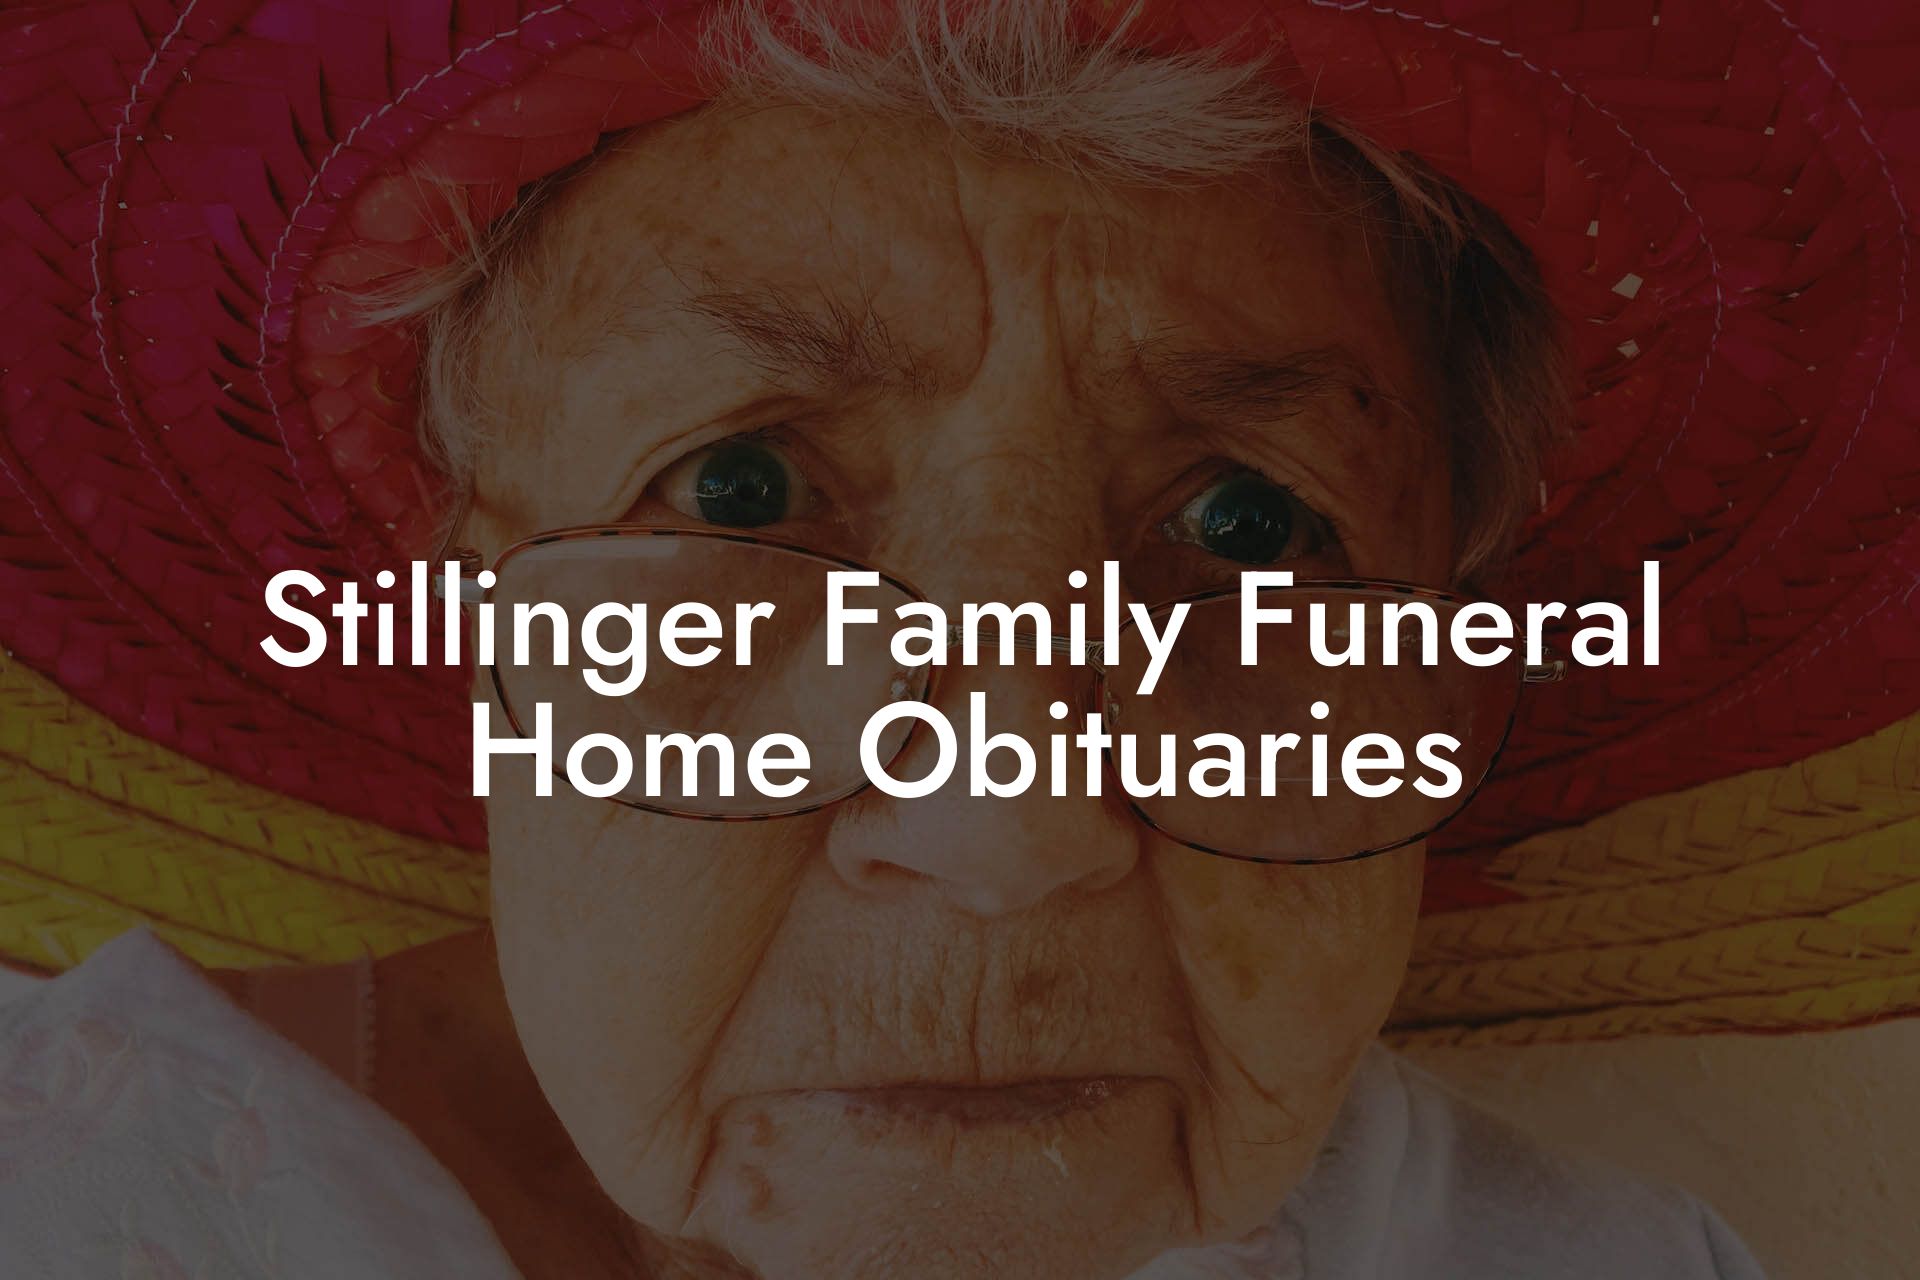 Stillinger Family Funeral Home Obituaries